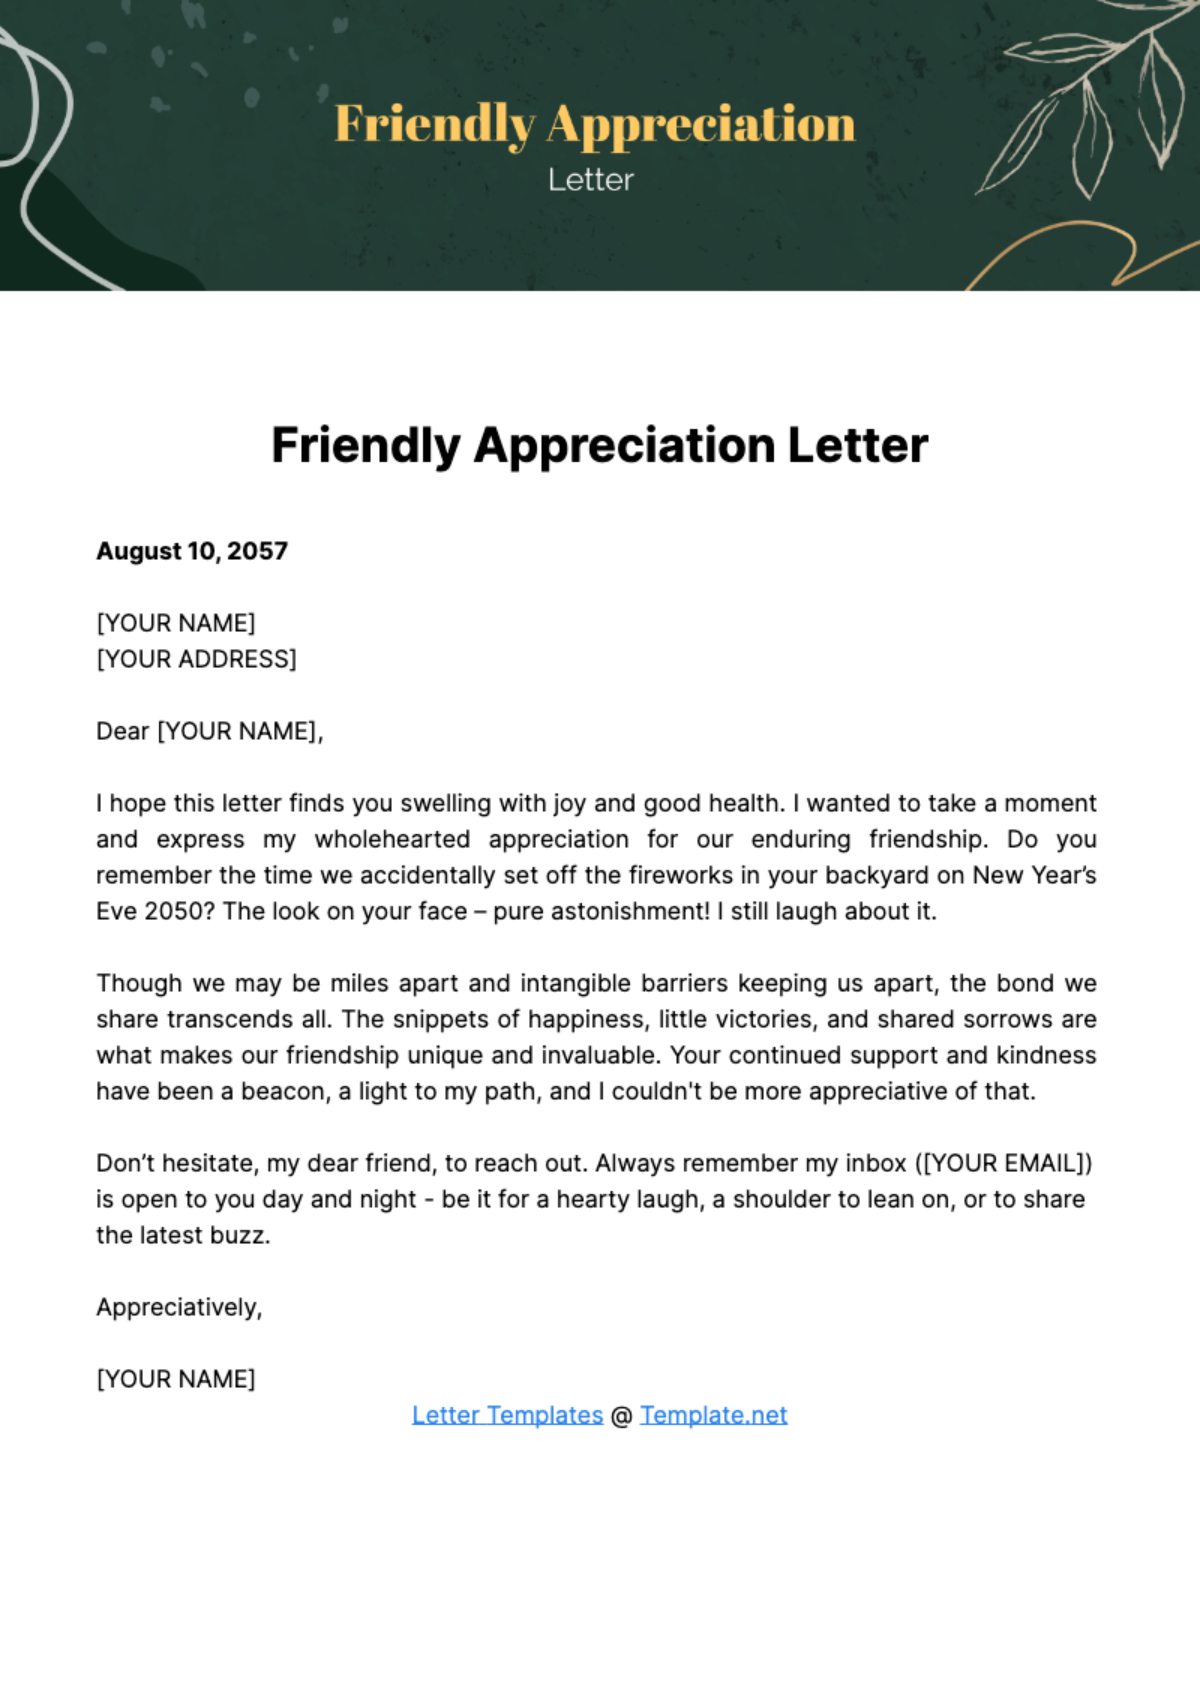 Free Friendly Appreciation Letter Template